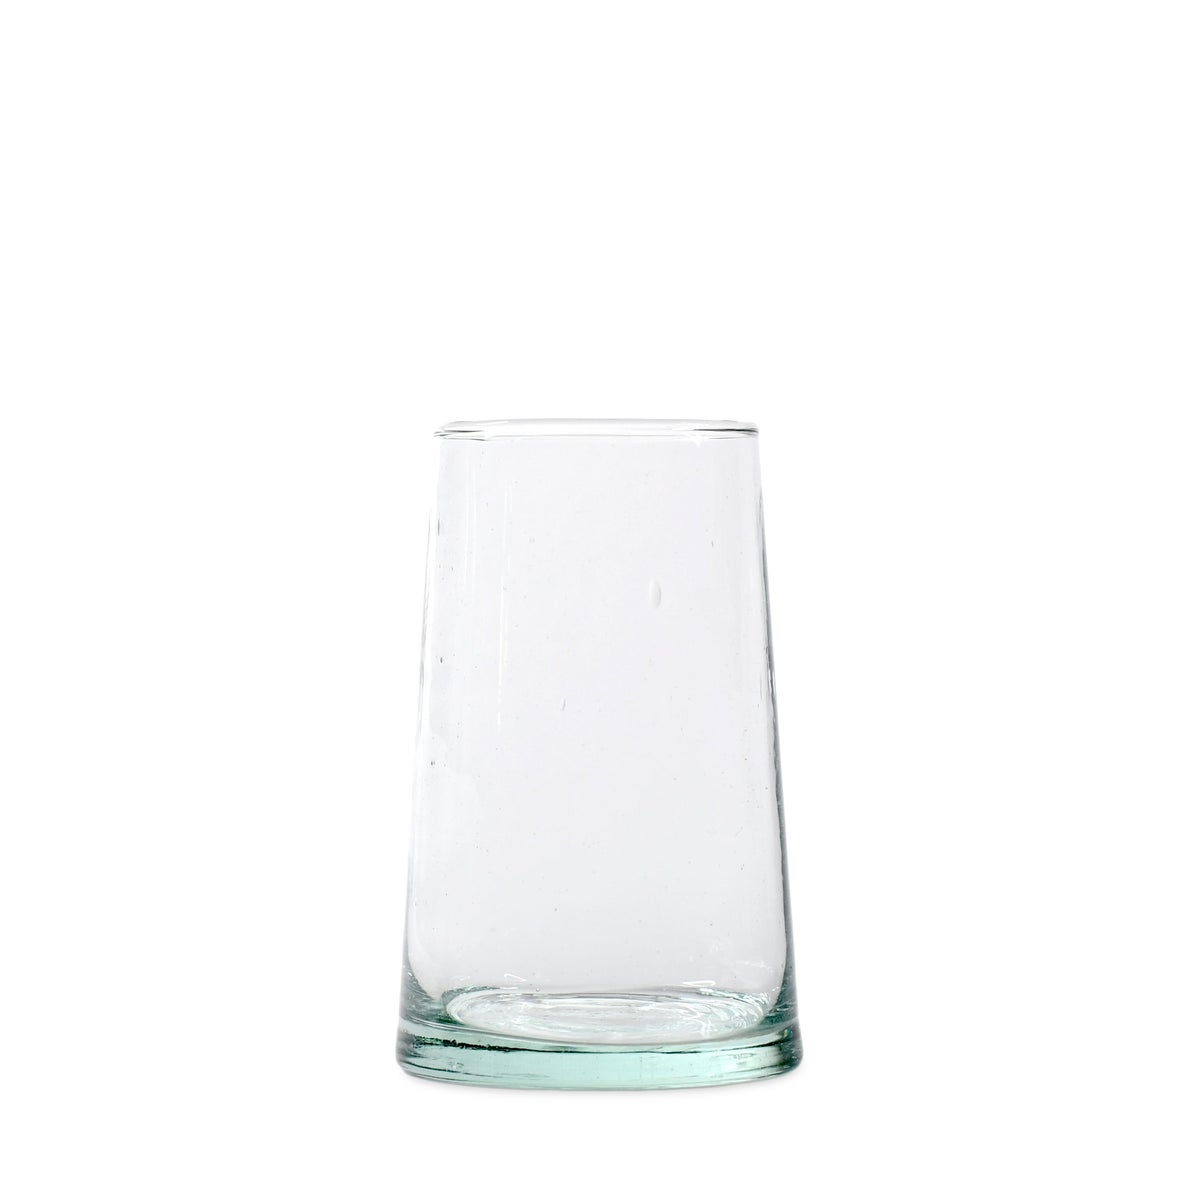 HAWKINS NEW YORK - RECLAIMED GLASS - LG